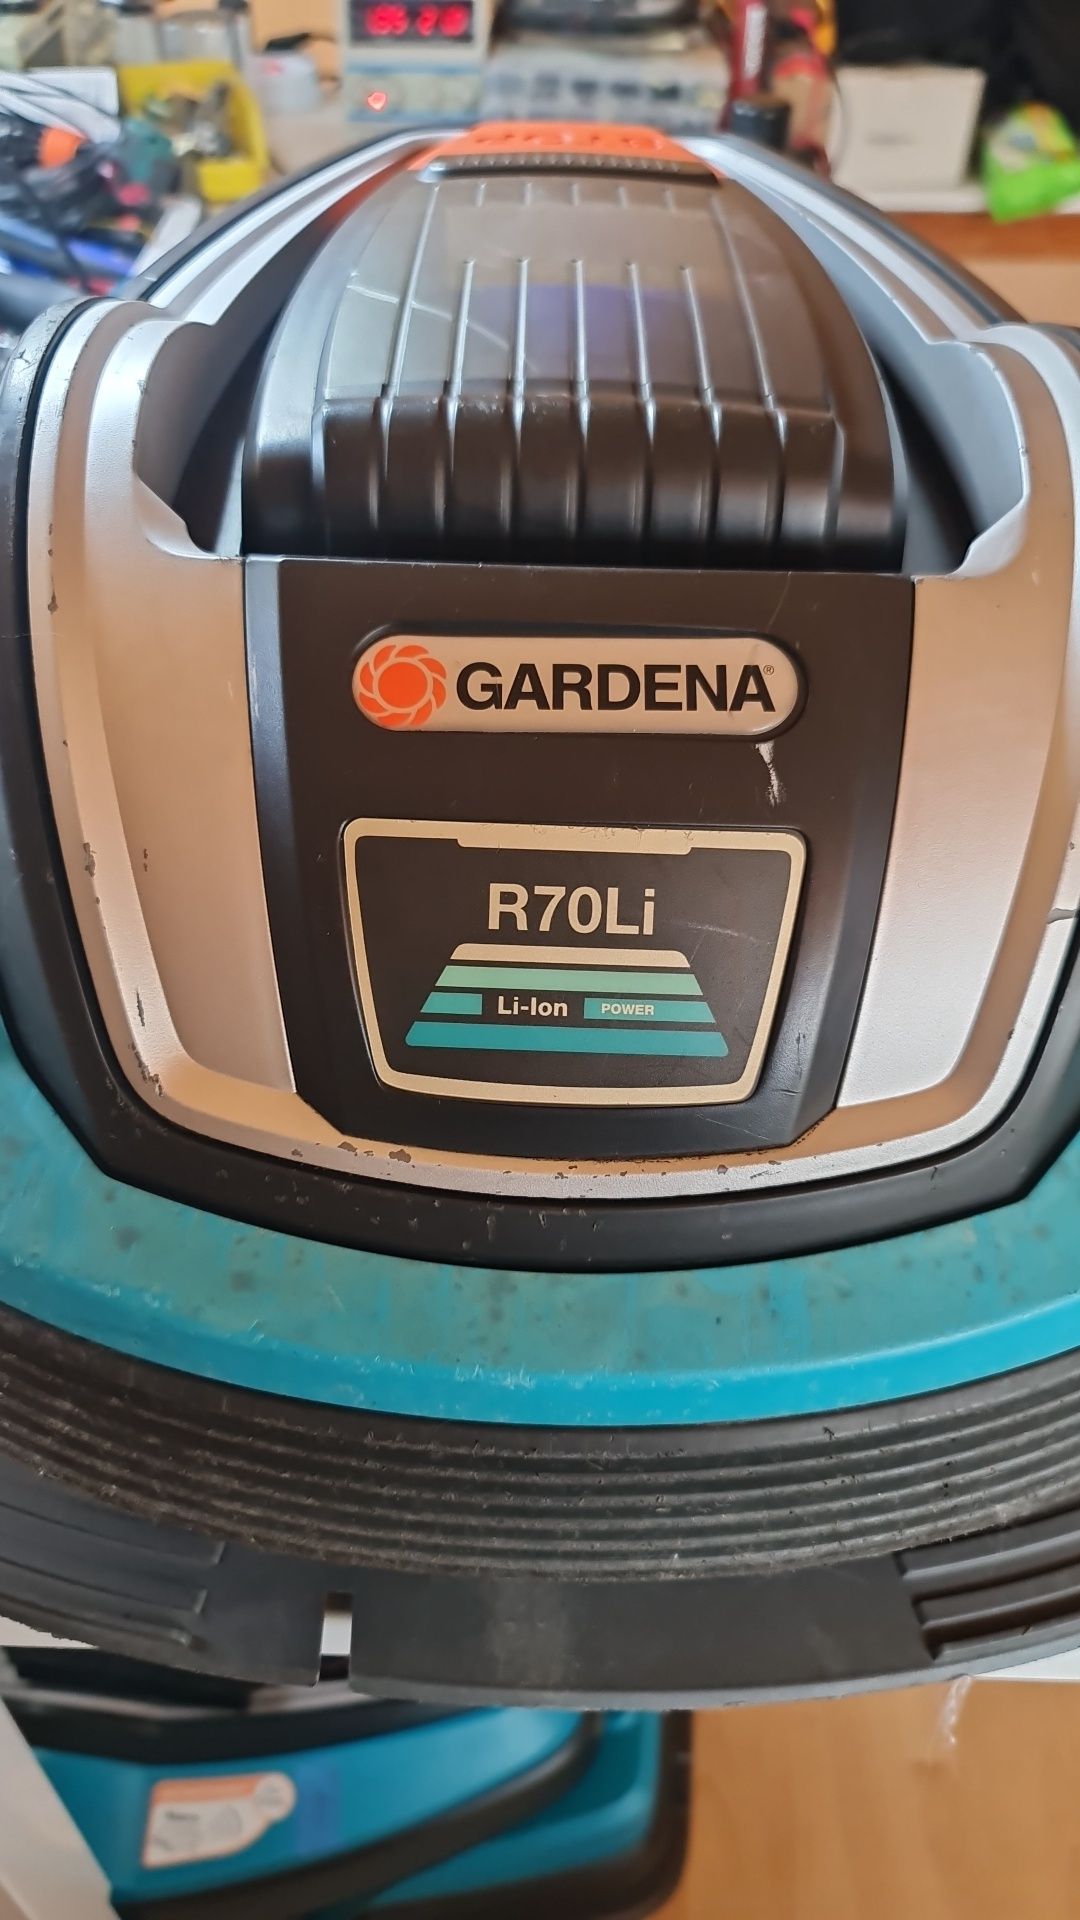 Robot 700m2 Gardena R70Li tuns iarba gazon